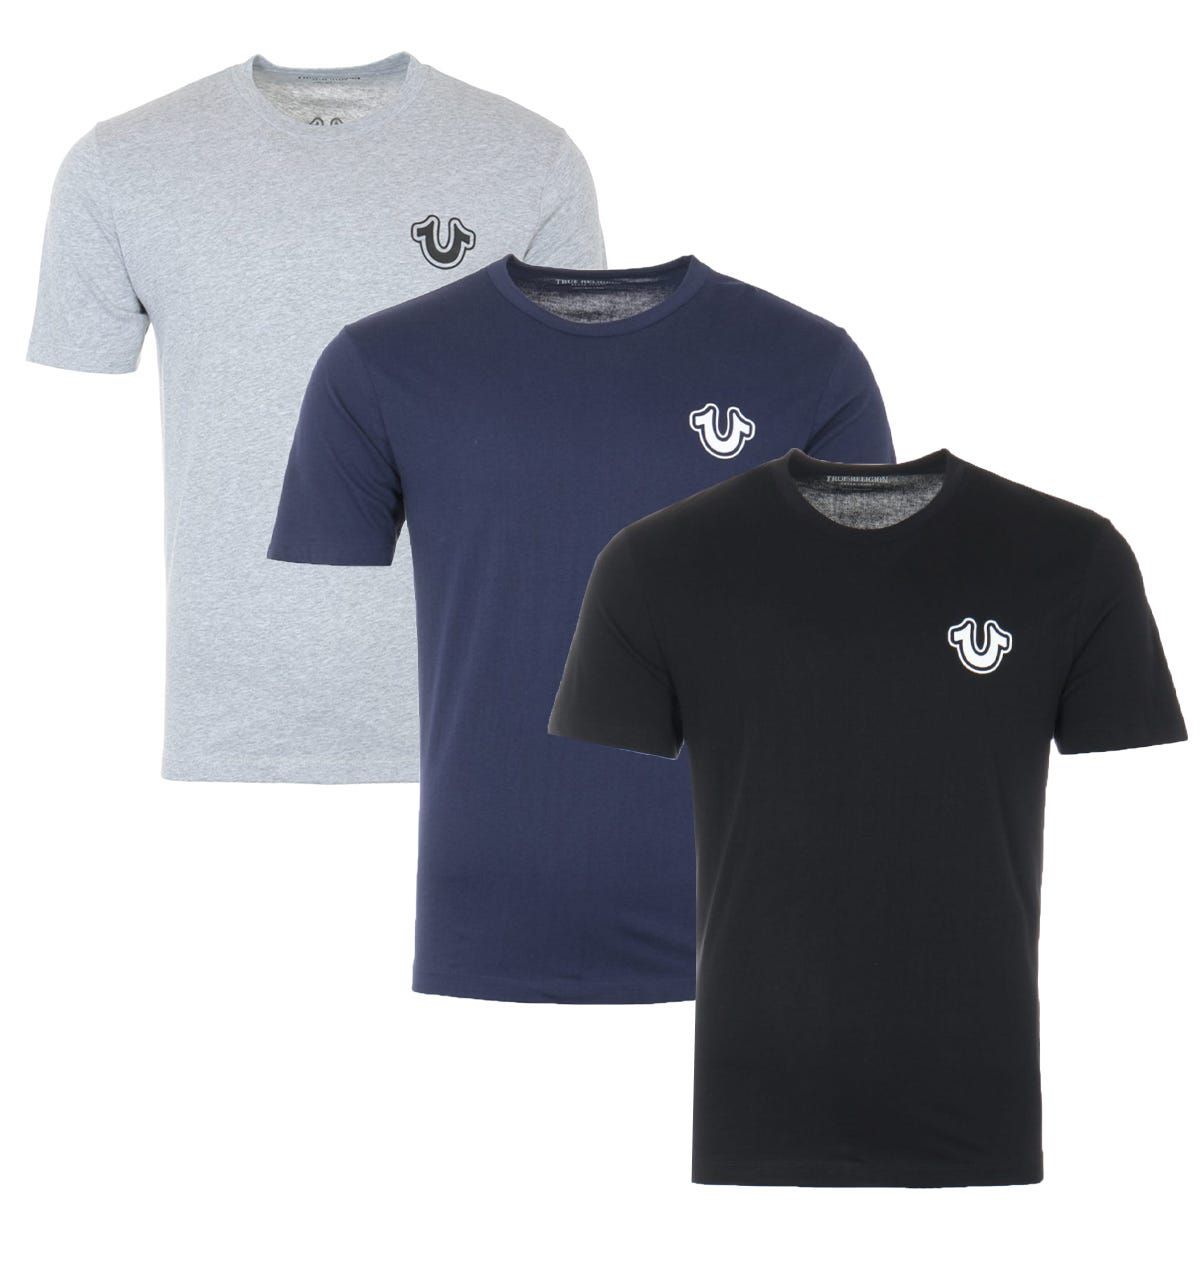 True Religion 3 Pack Core Logo Crew Neck T-Shirts - Black, Navy & Grey